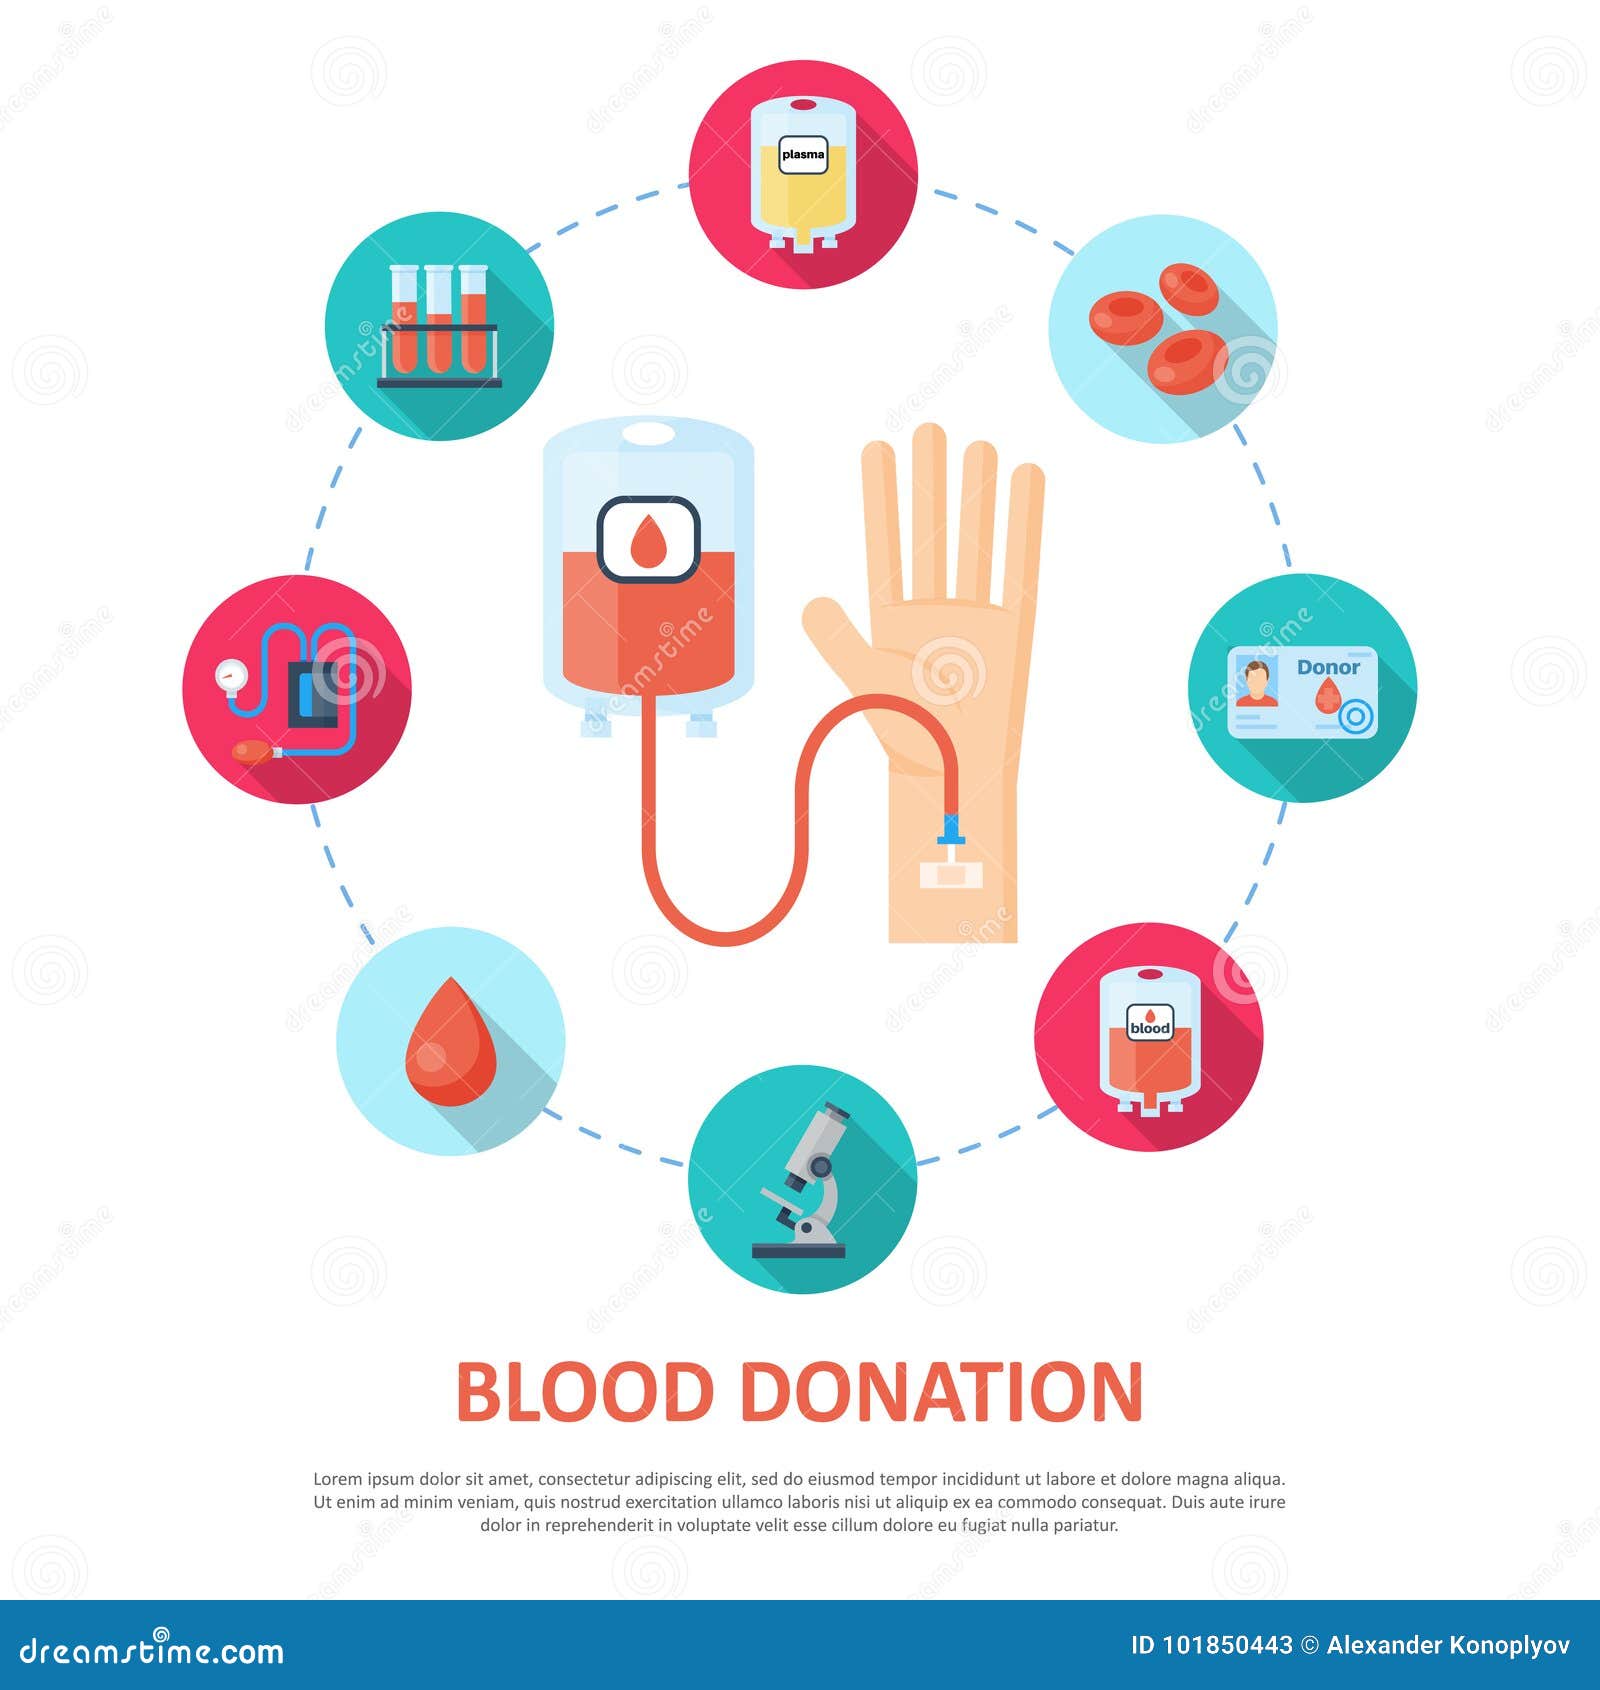 Донорство крови антибиотики. Рисунок на тему донорство крови. Инсульт и донорство крови. Миопия и донорство крови.